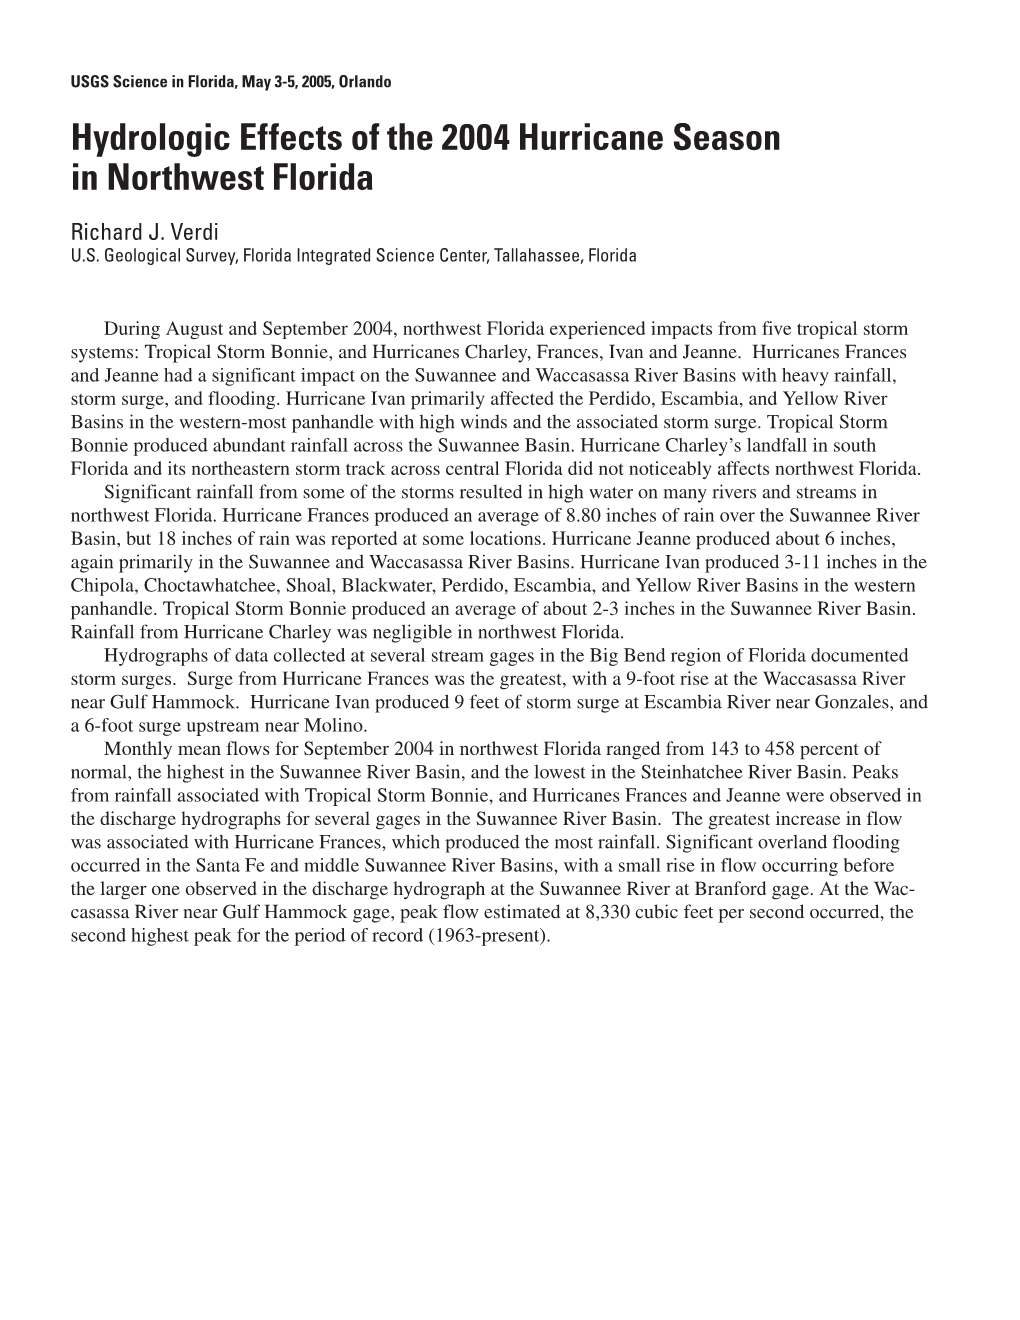 Hydrologic Effects of the 2004 Hurricane Season in Northwest Florida Richard J